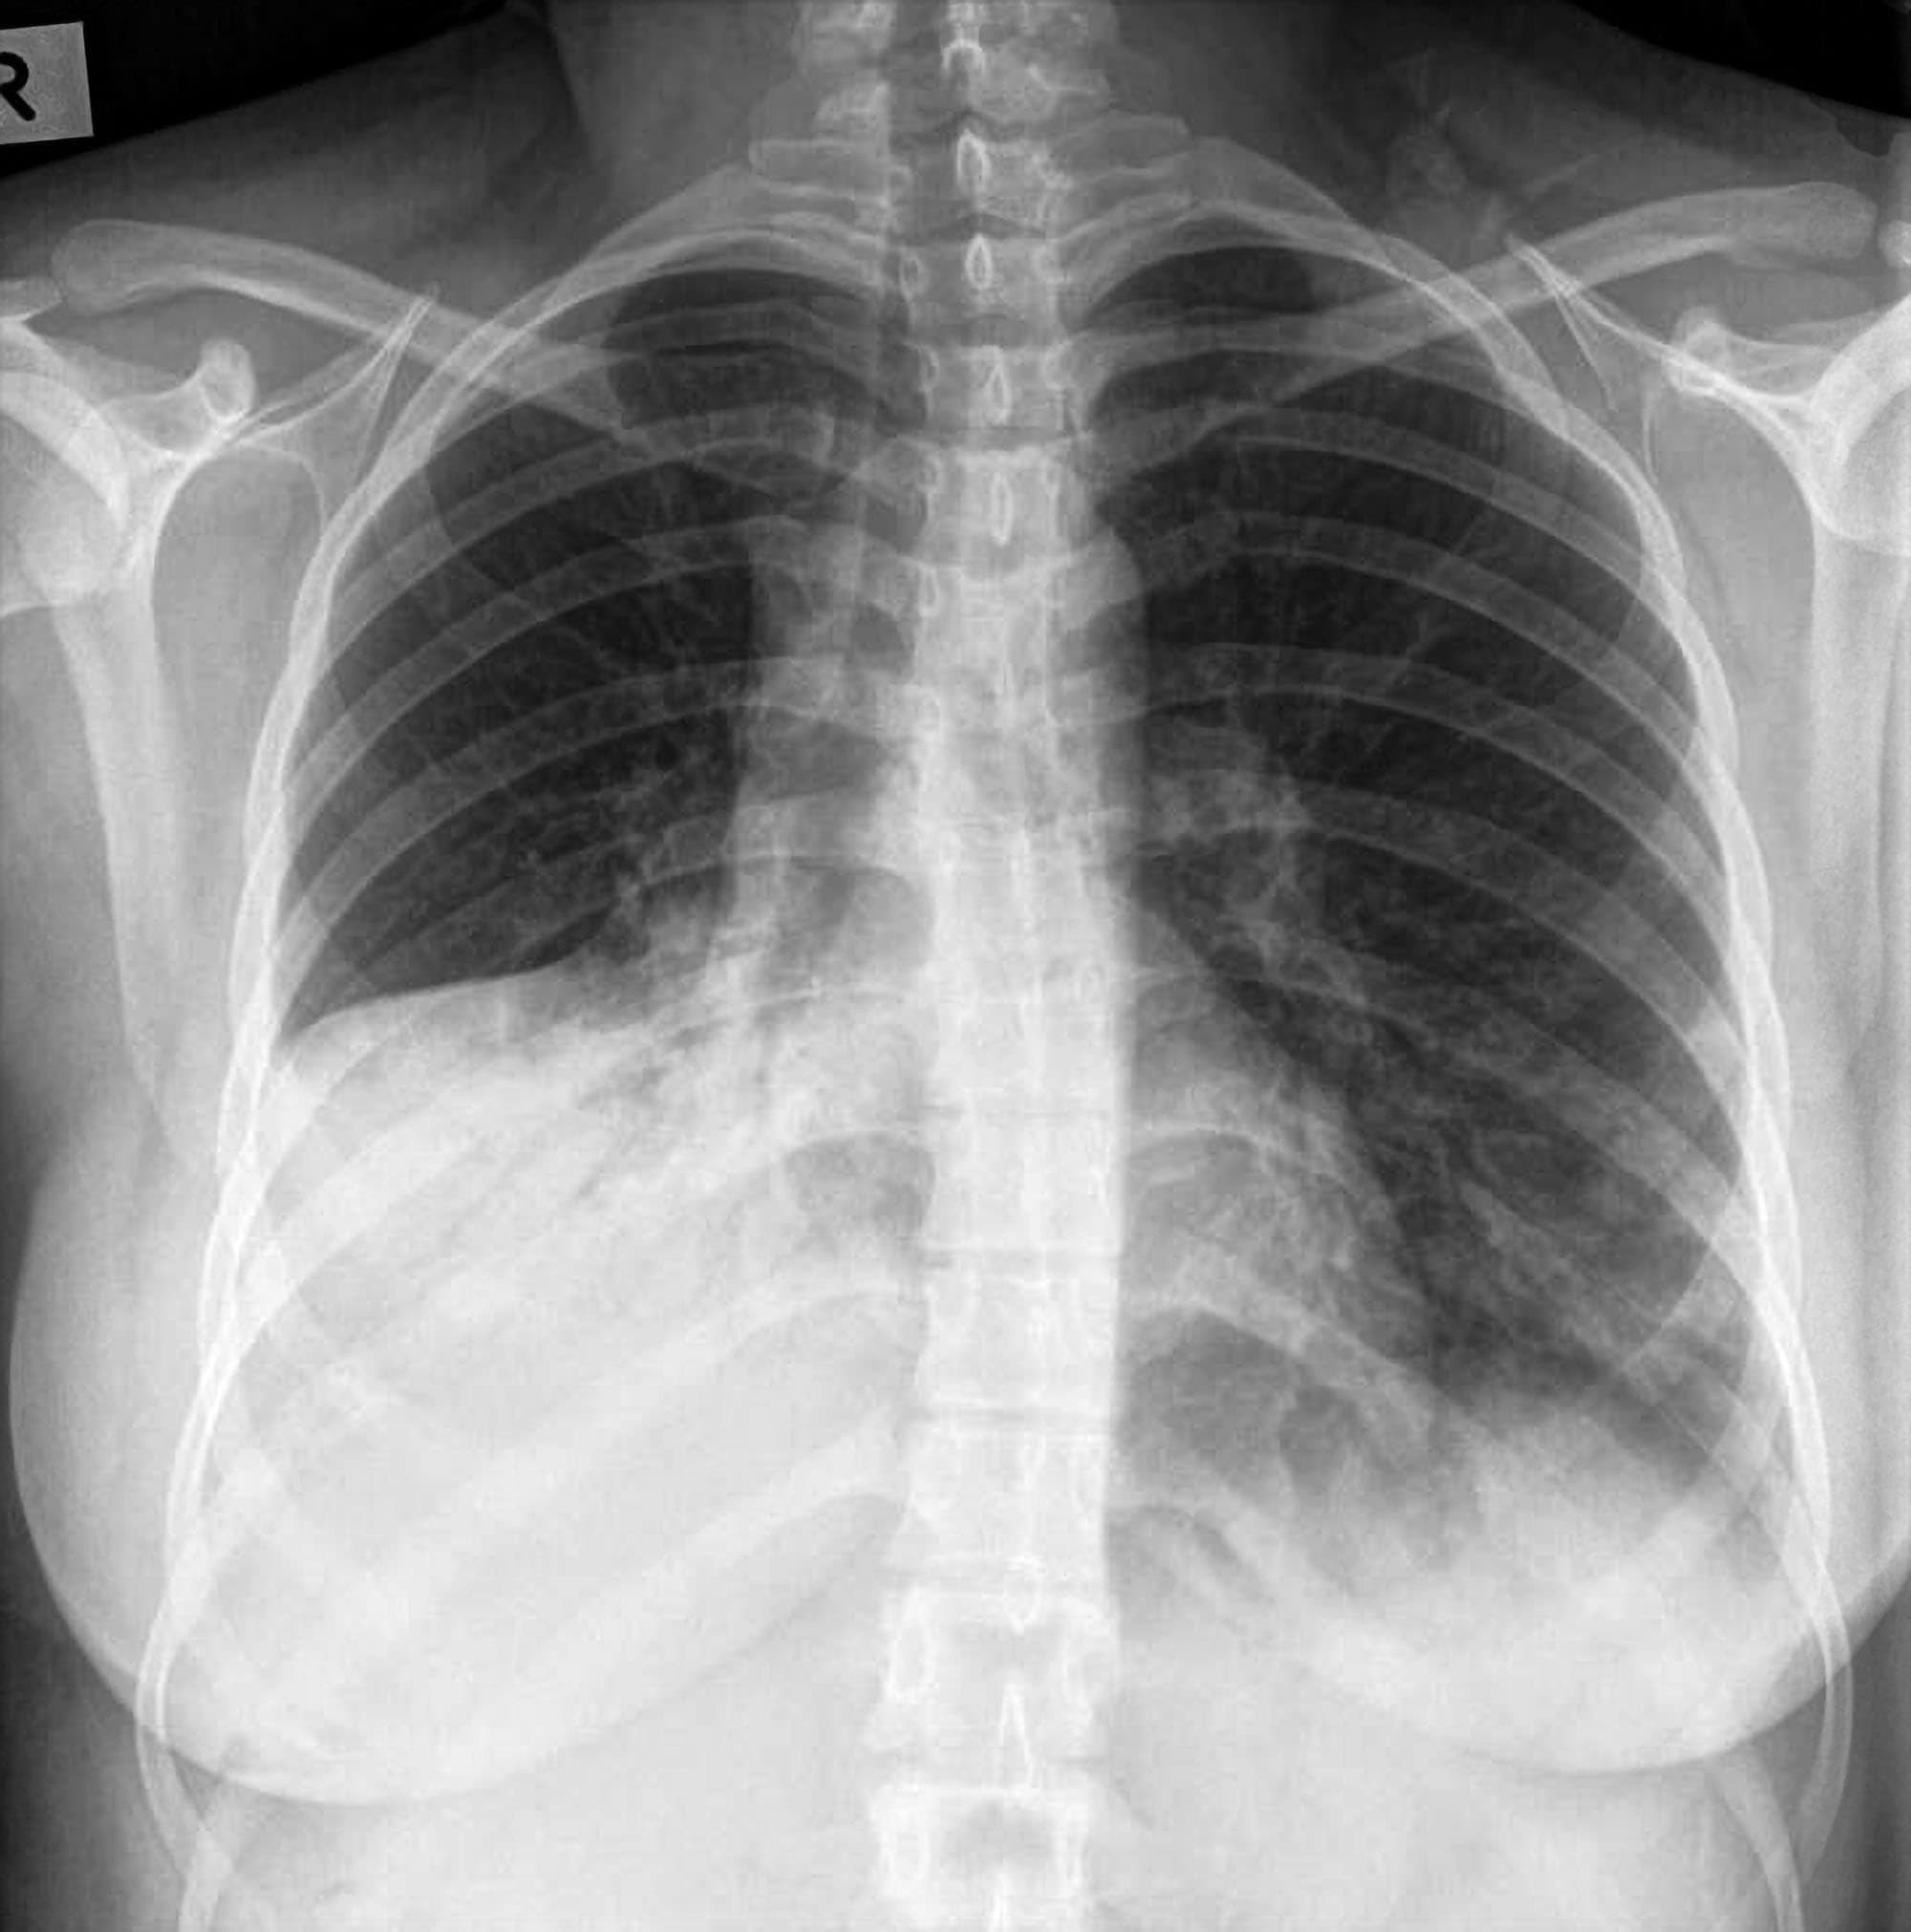 chest xray normal vs abnormal